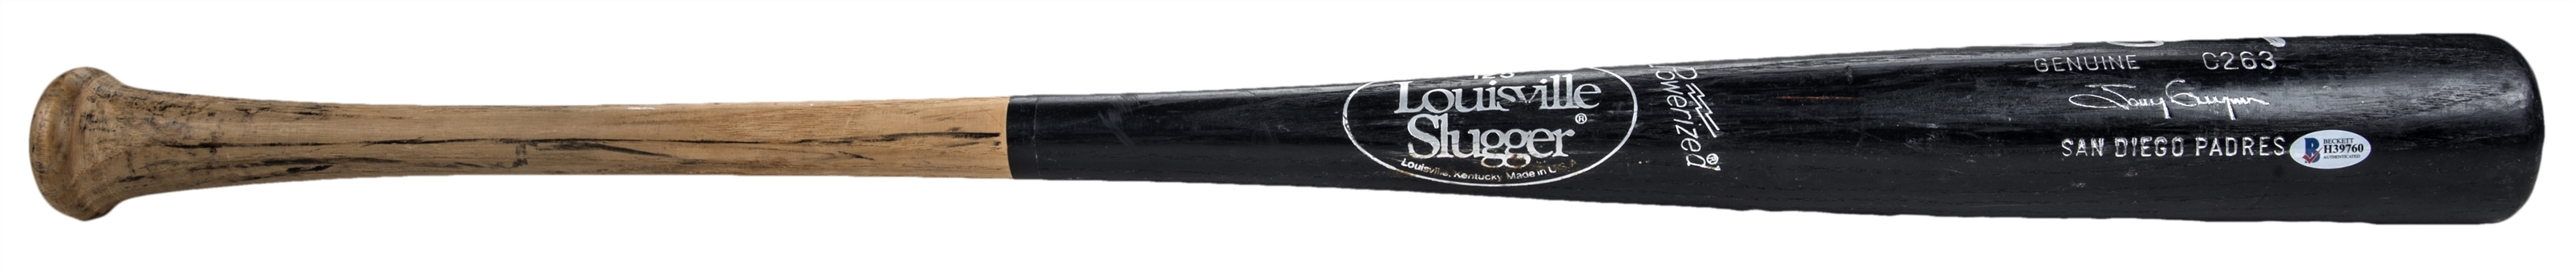 1992 Tony Gwynn Game Used & Signed Louisville Slugger C263 Model Bat (PSA/DNA & Beckett)